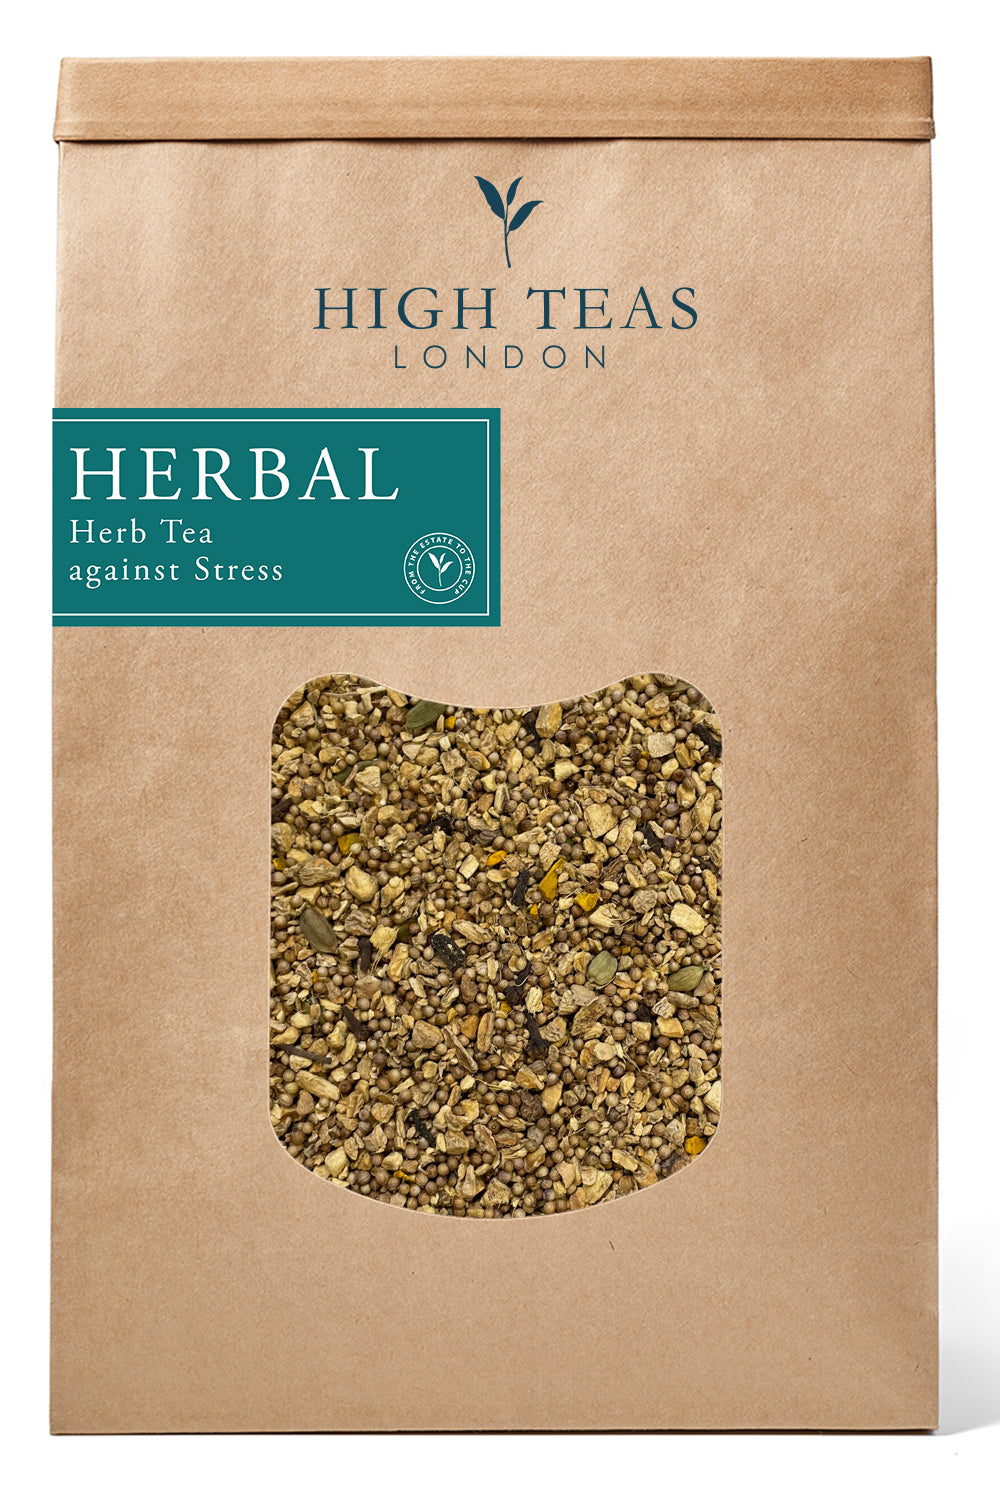 Herb Tea against Stress - Vata supports the Dosha "VATA"-500g-Loose Leaf Tea-High Teas